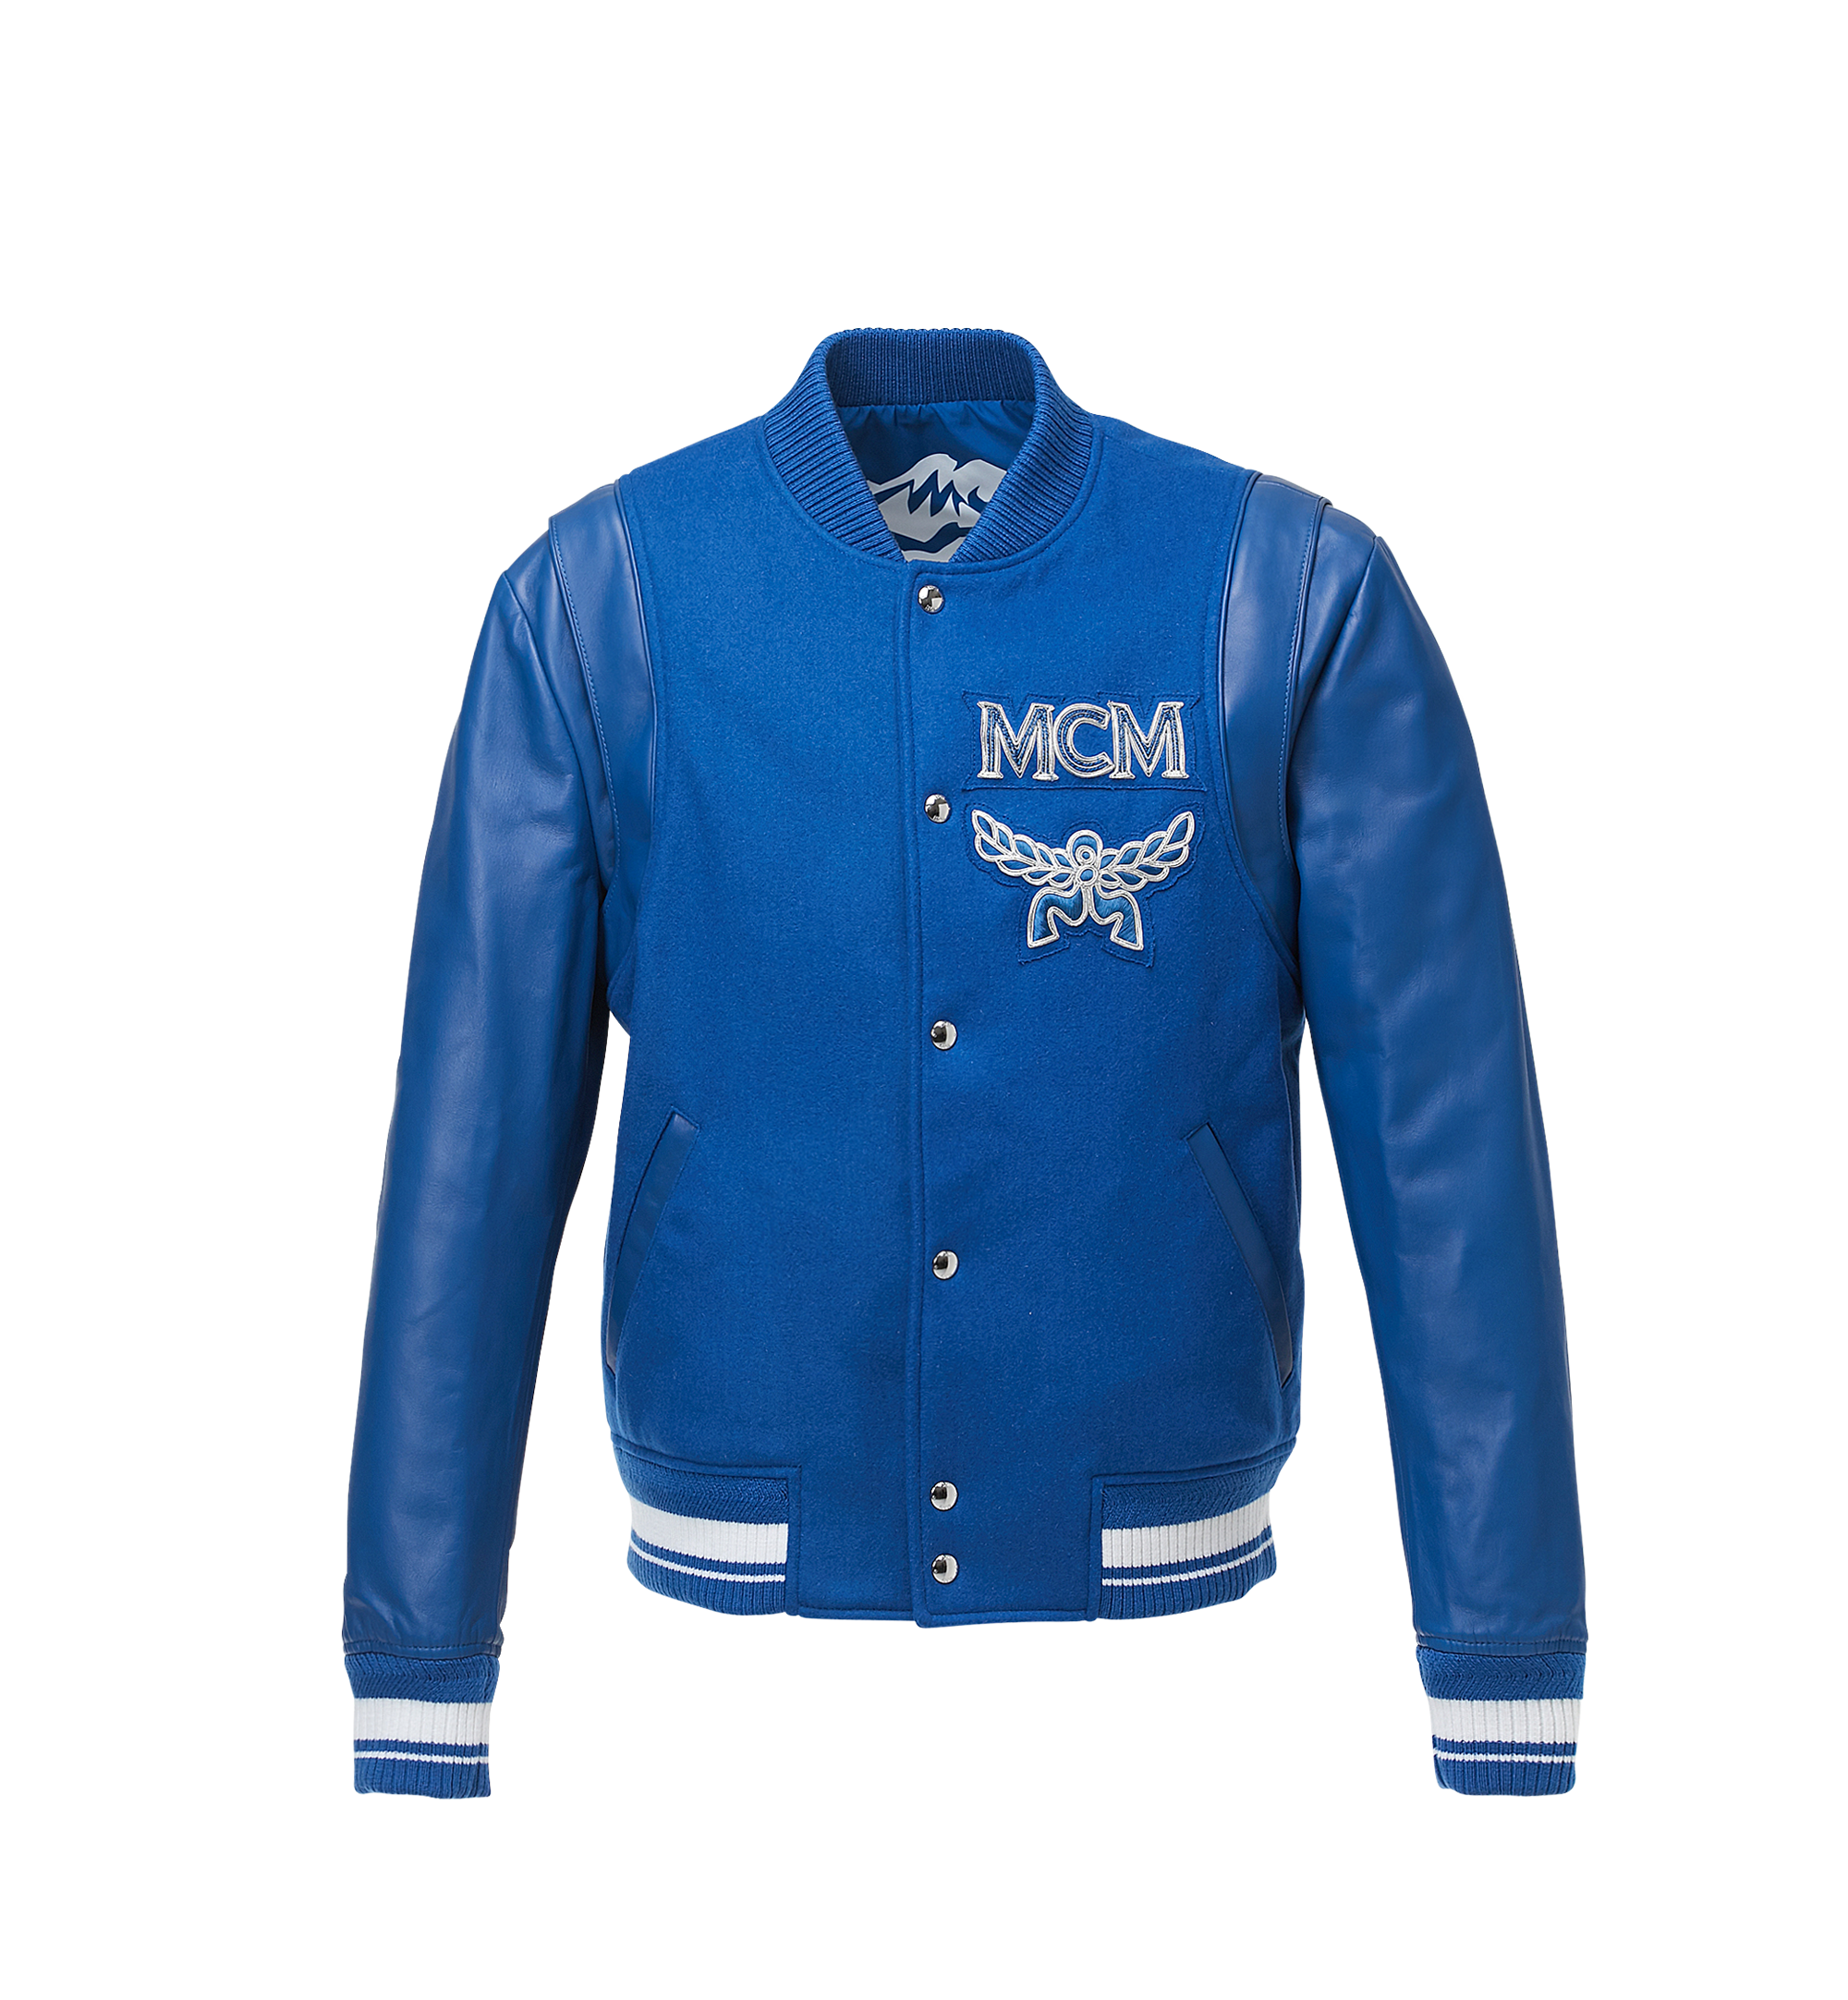 Phenomenon x MCM - Stadium Jacket in Blue